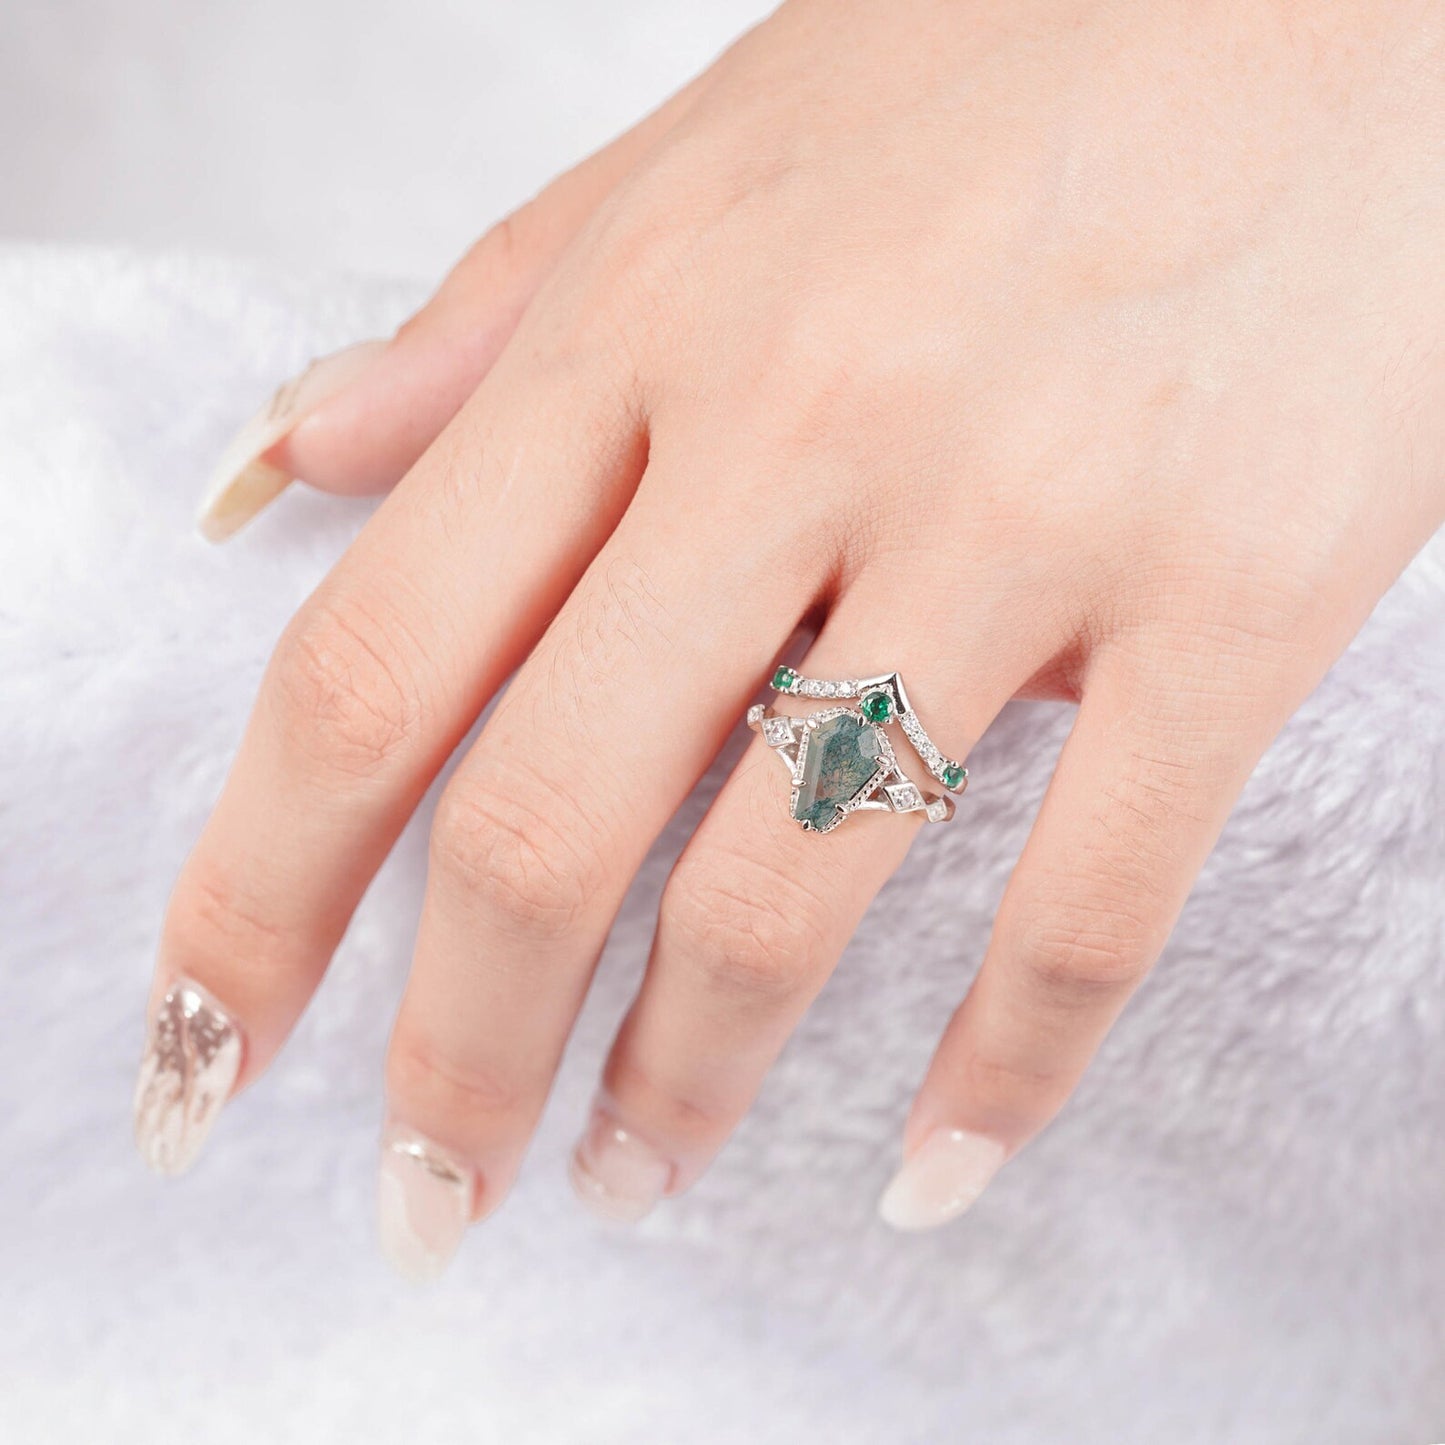 Atra Moss Agate Quartz amd Emerald Ring Set Sterling Silver